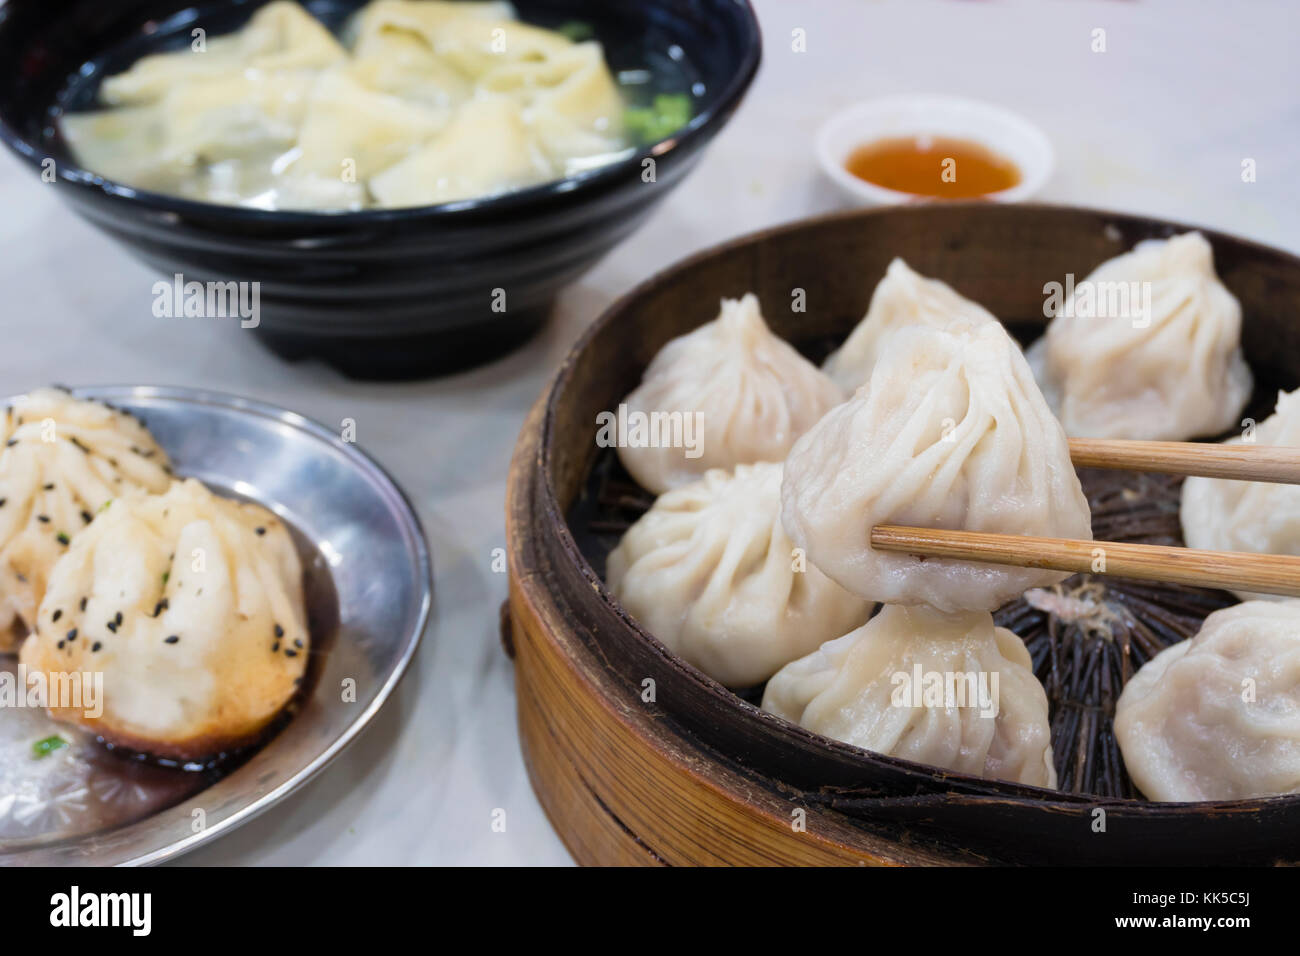 Enjoying traditional Shanghai food including dumpling, wonton and xiaolongbao Stock Photo